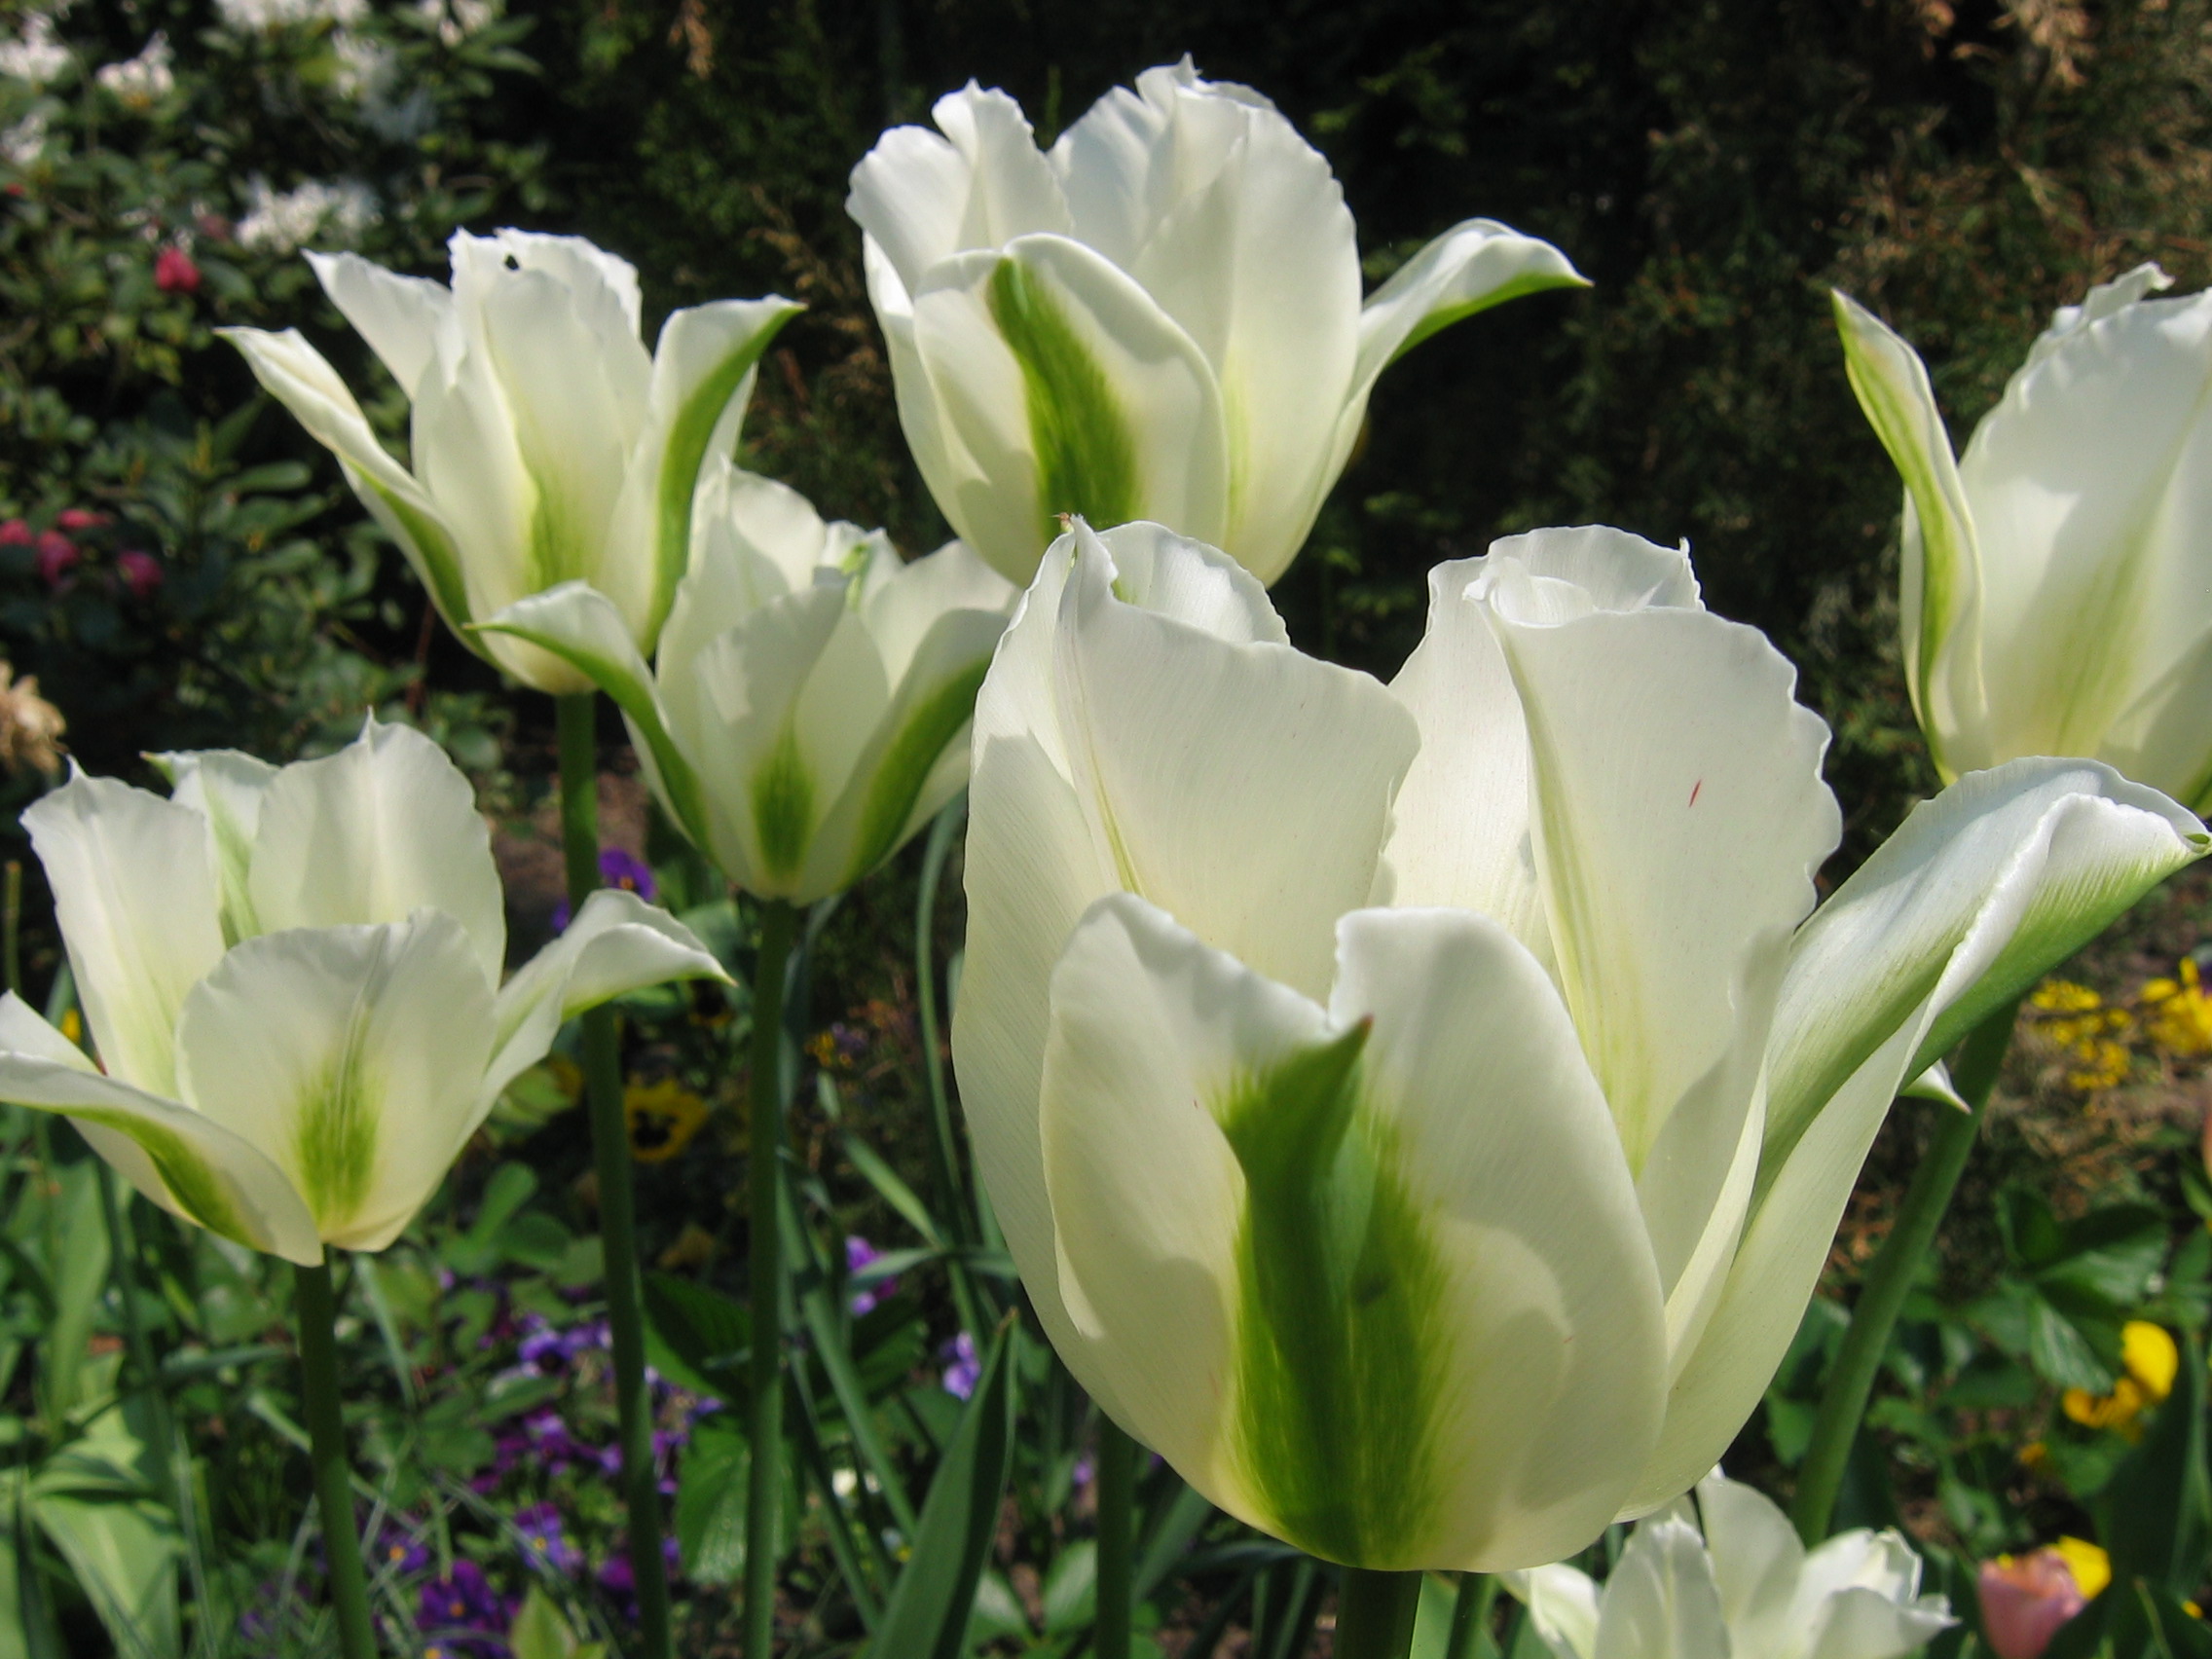 File:White tulips 5409.jpg - Wikipedia